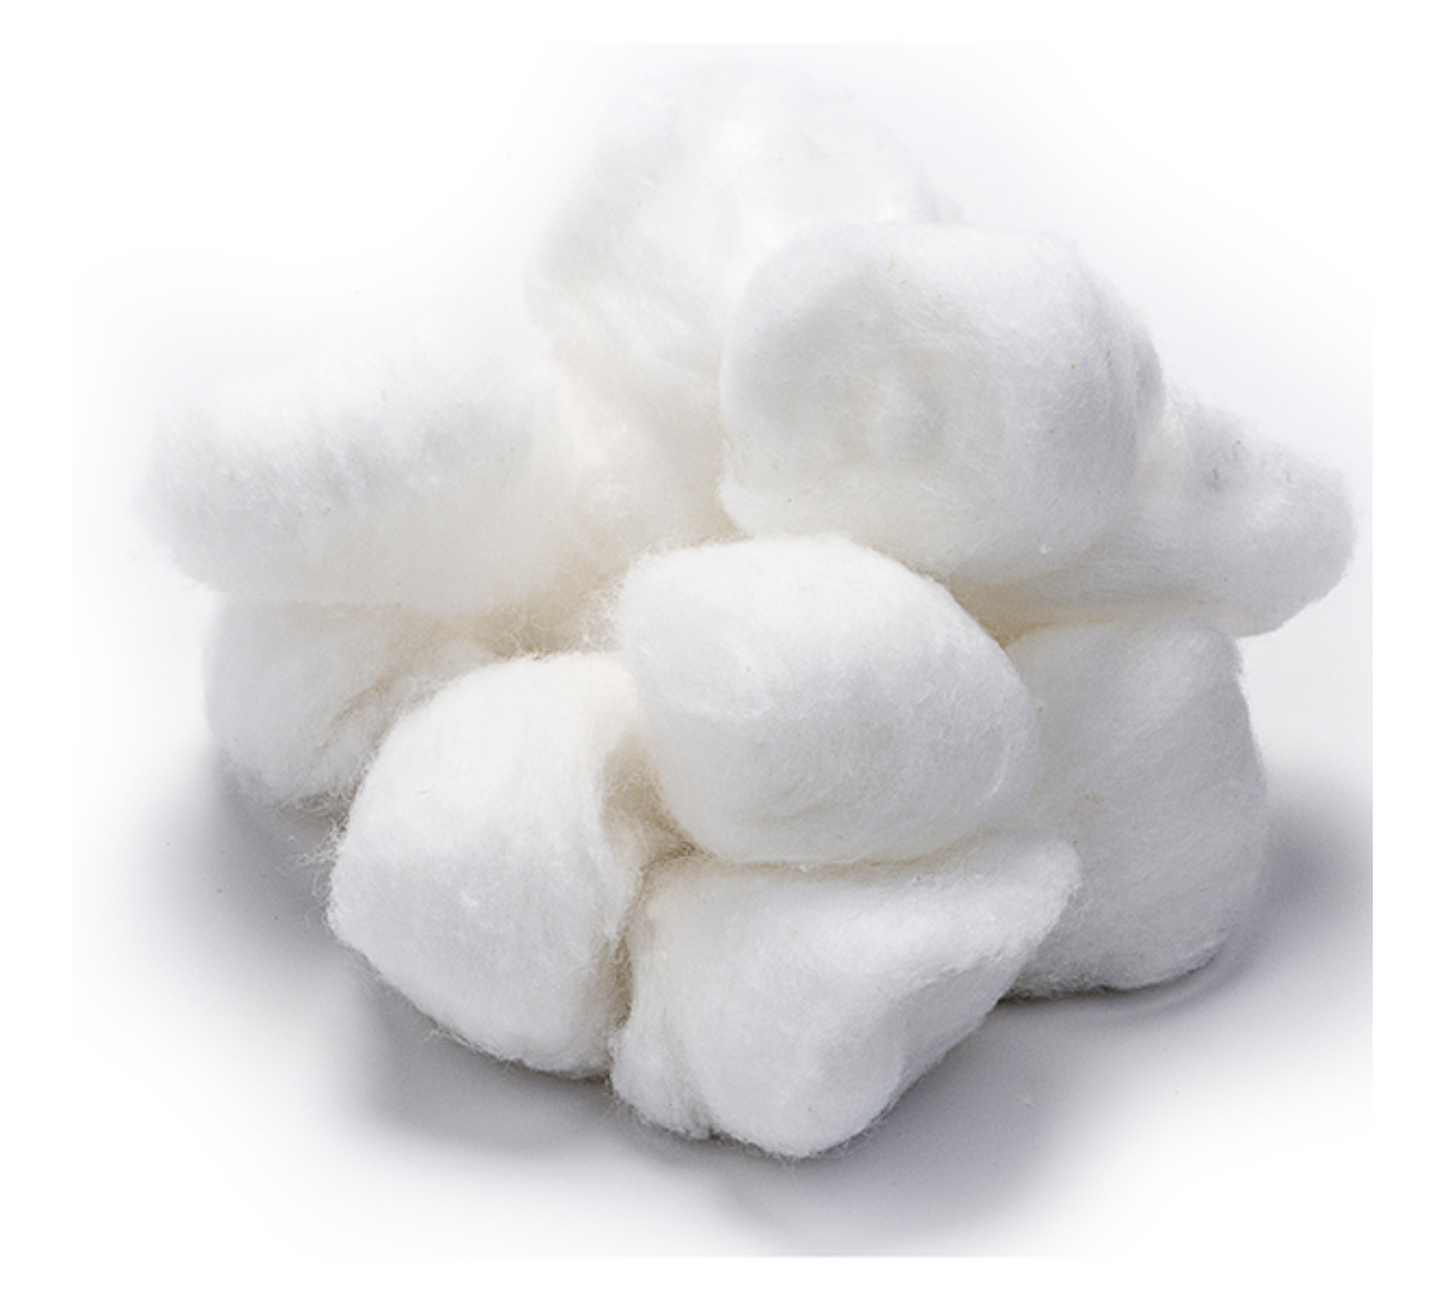 Intrinsics Medium-Size 100% Cotton Balls, 300 Count